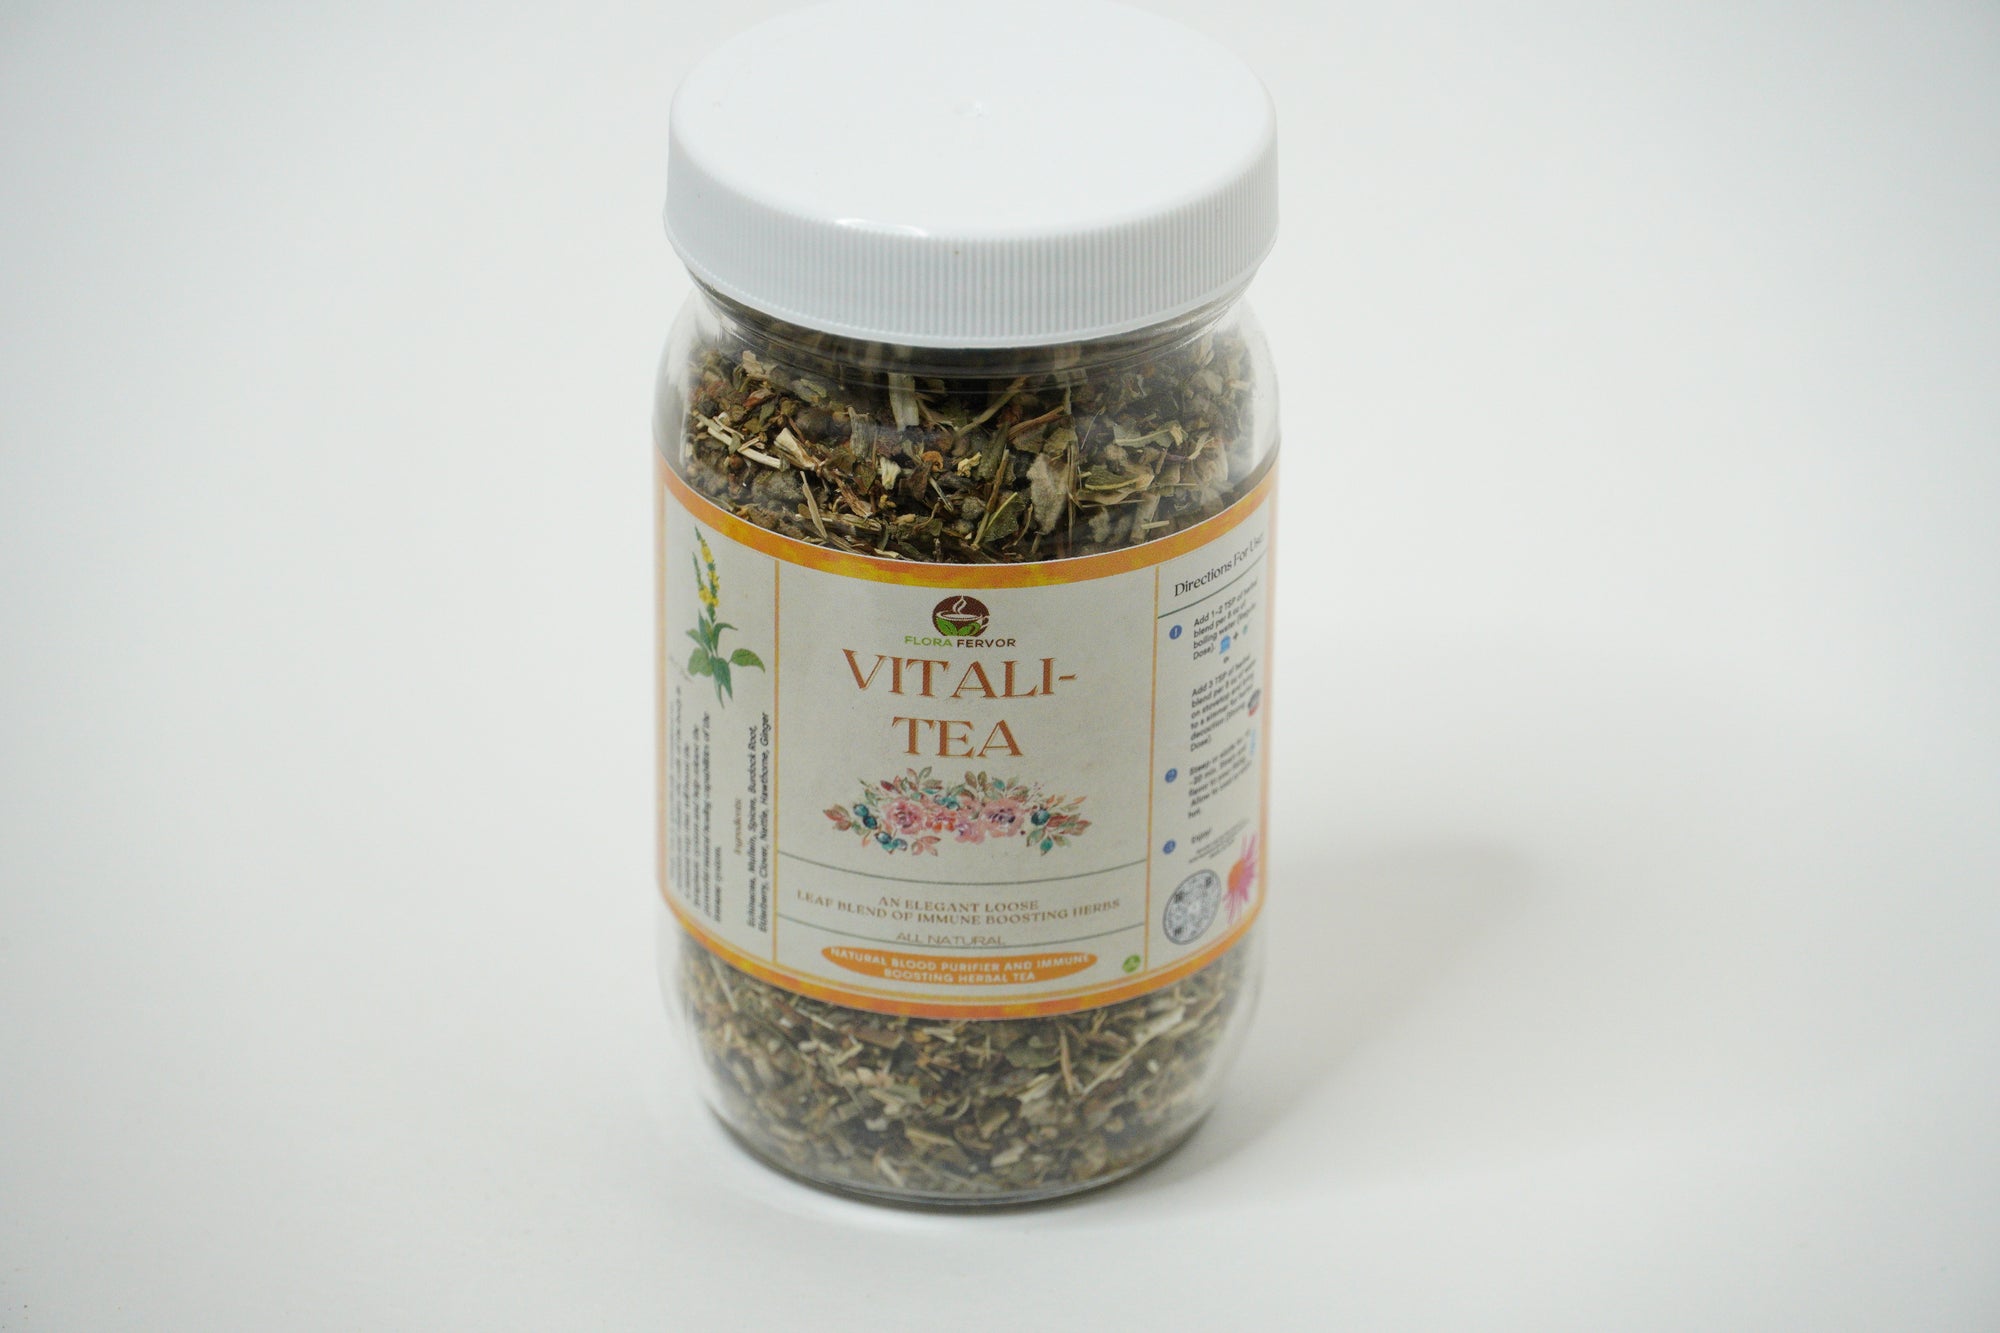 Vitali-Tea (Immune Booster 1.6 oz)